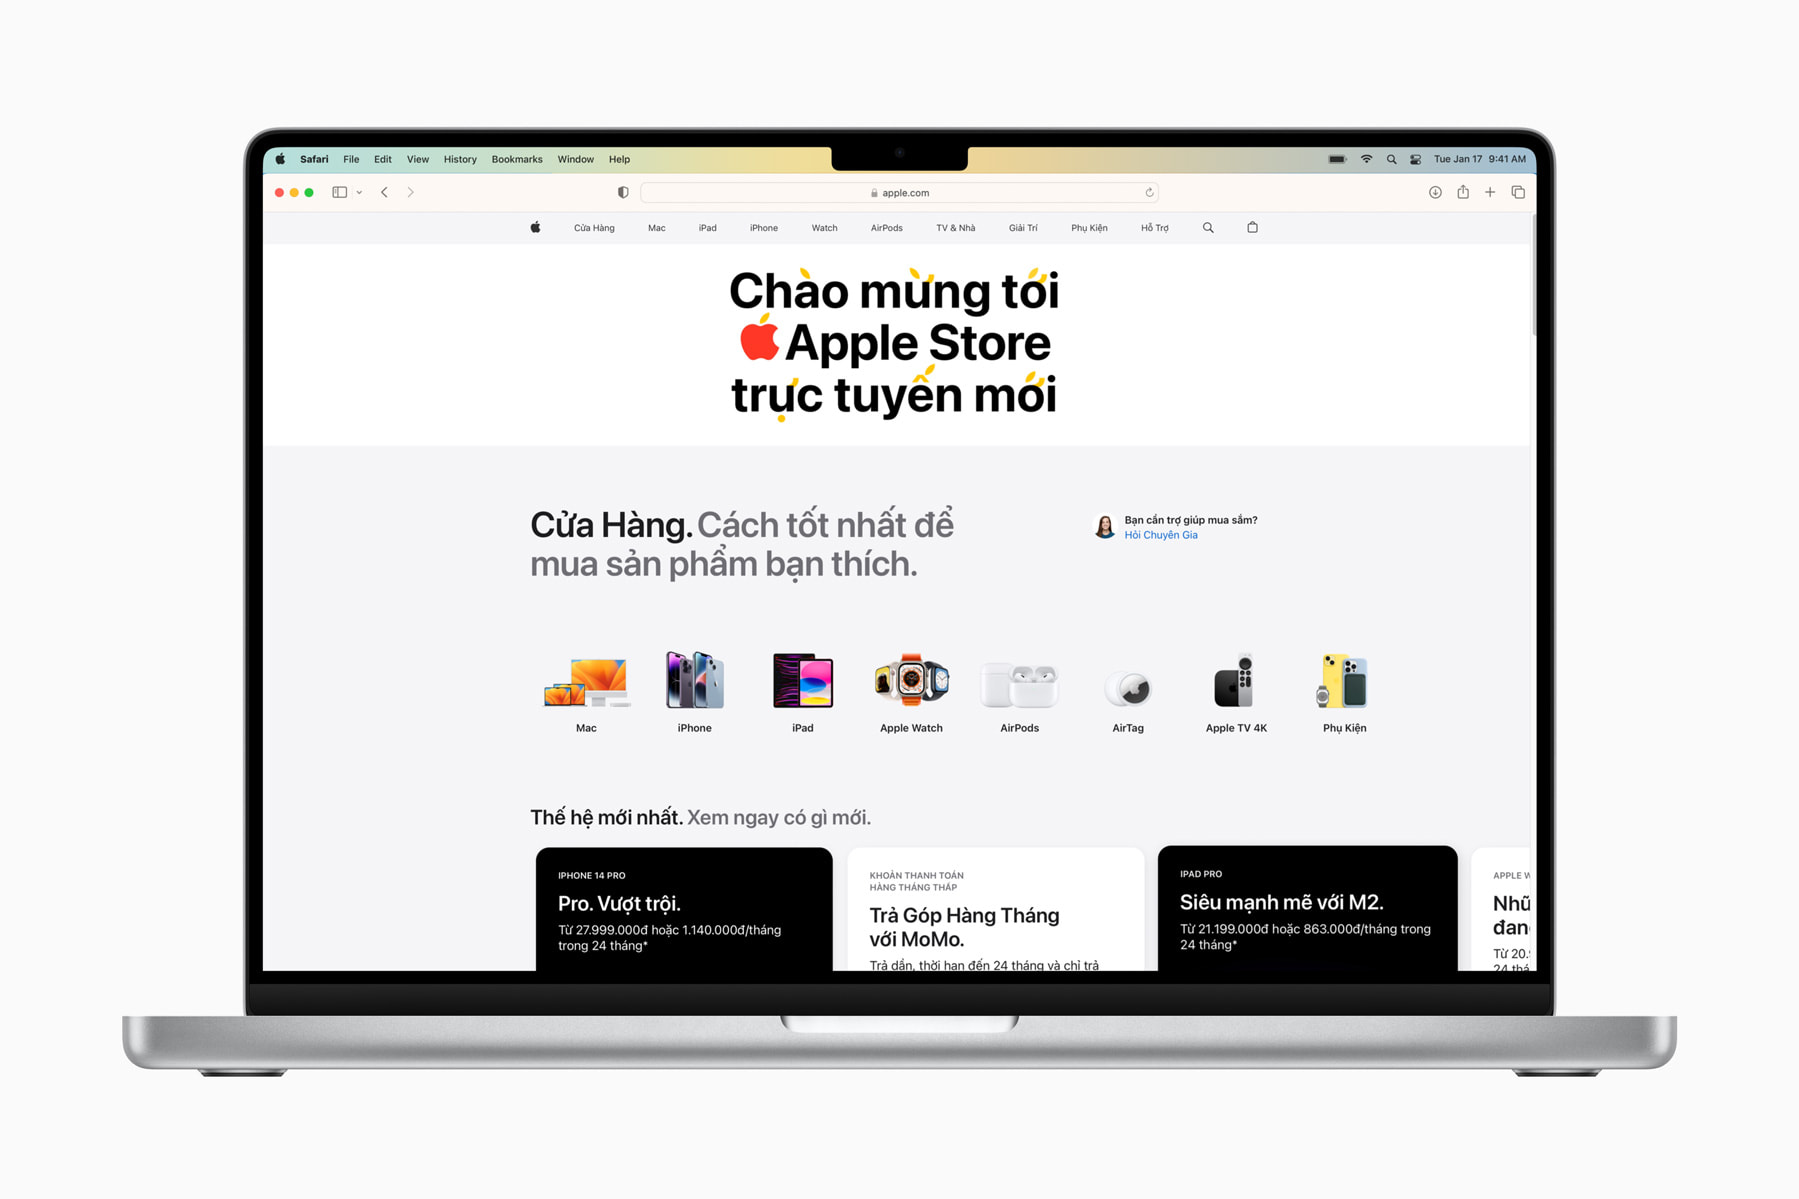 Apple launches Apple Store online in Vietnam - Apple (CM)